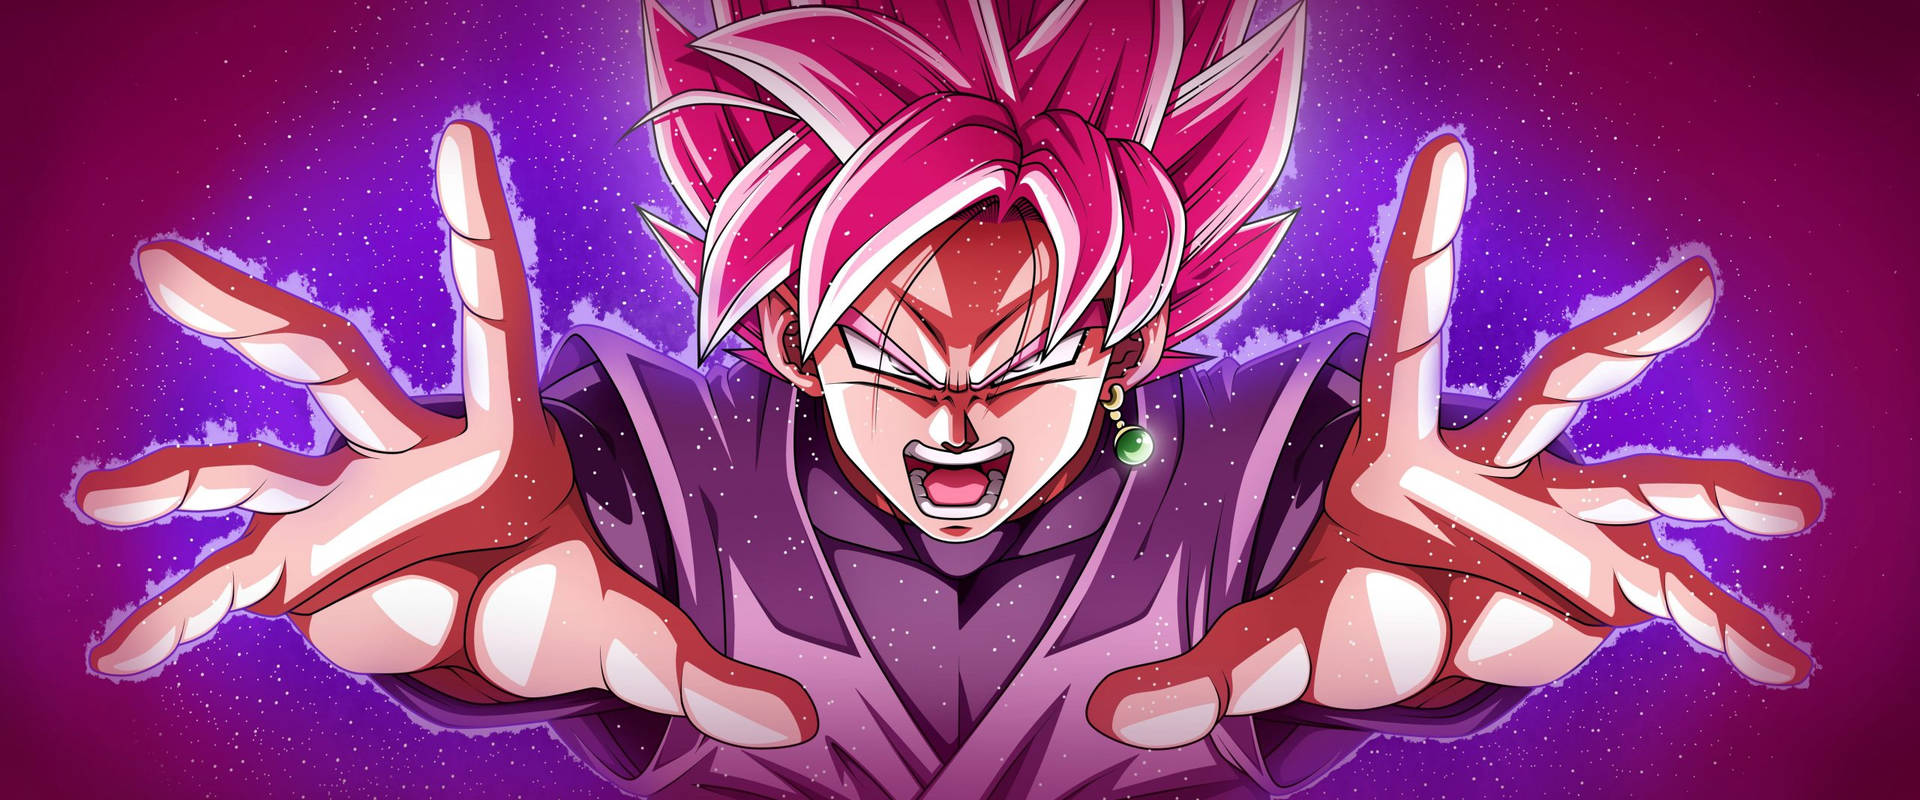 Goku 2560X1067 Wallpaper and Background Image